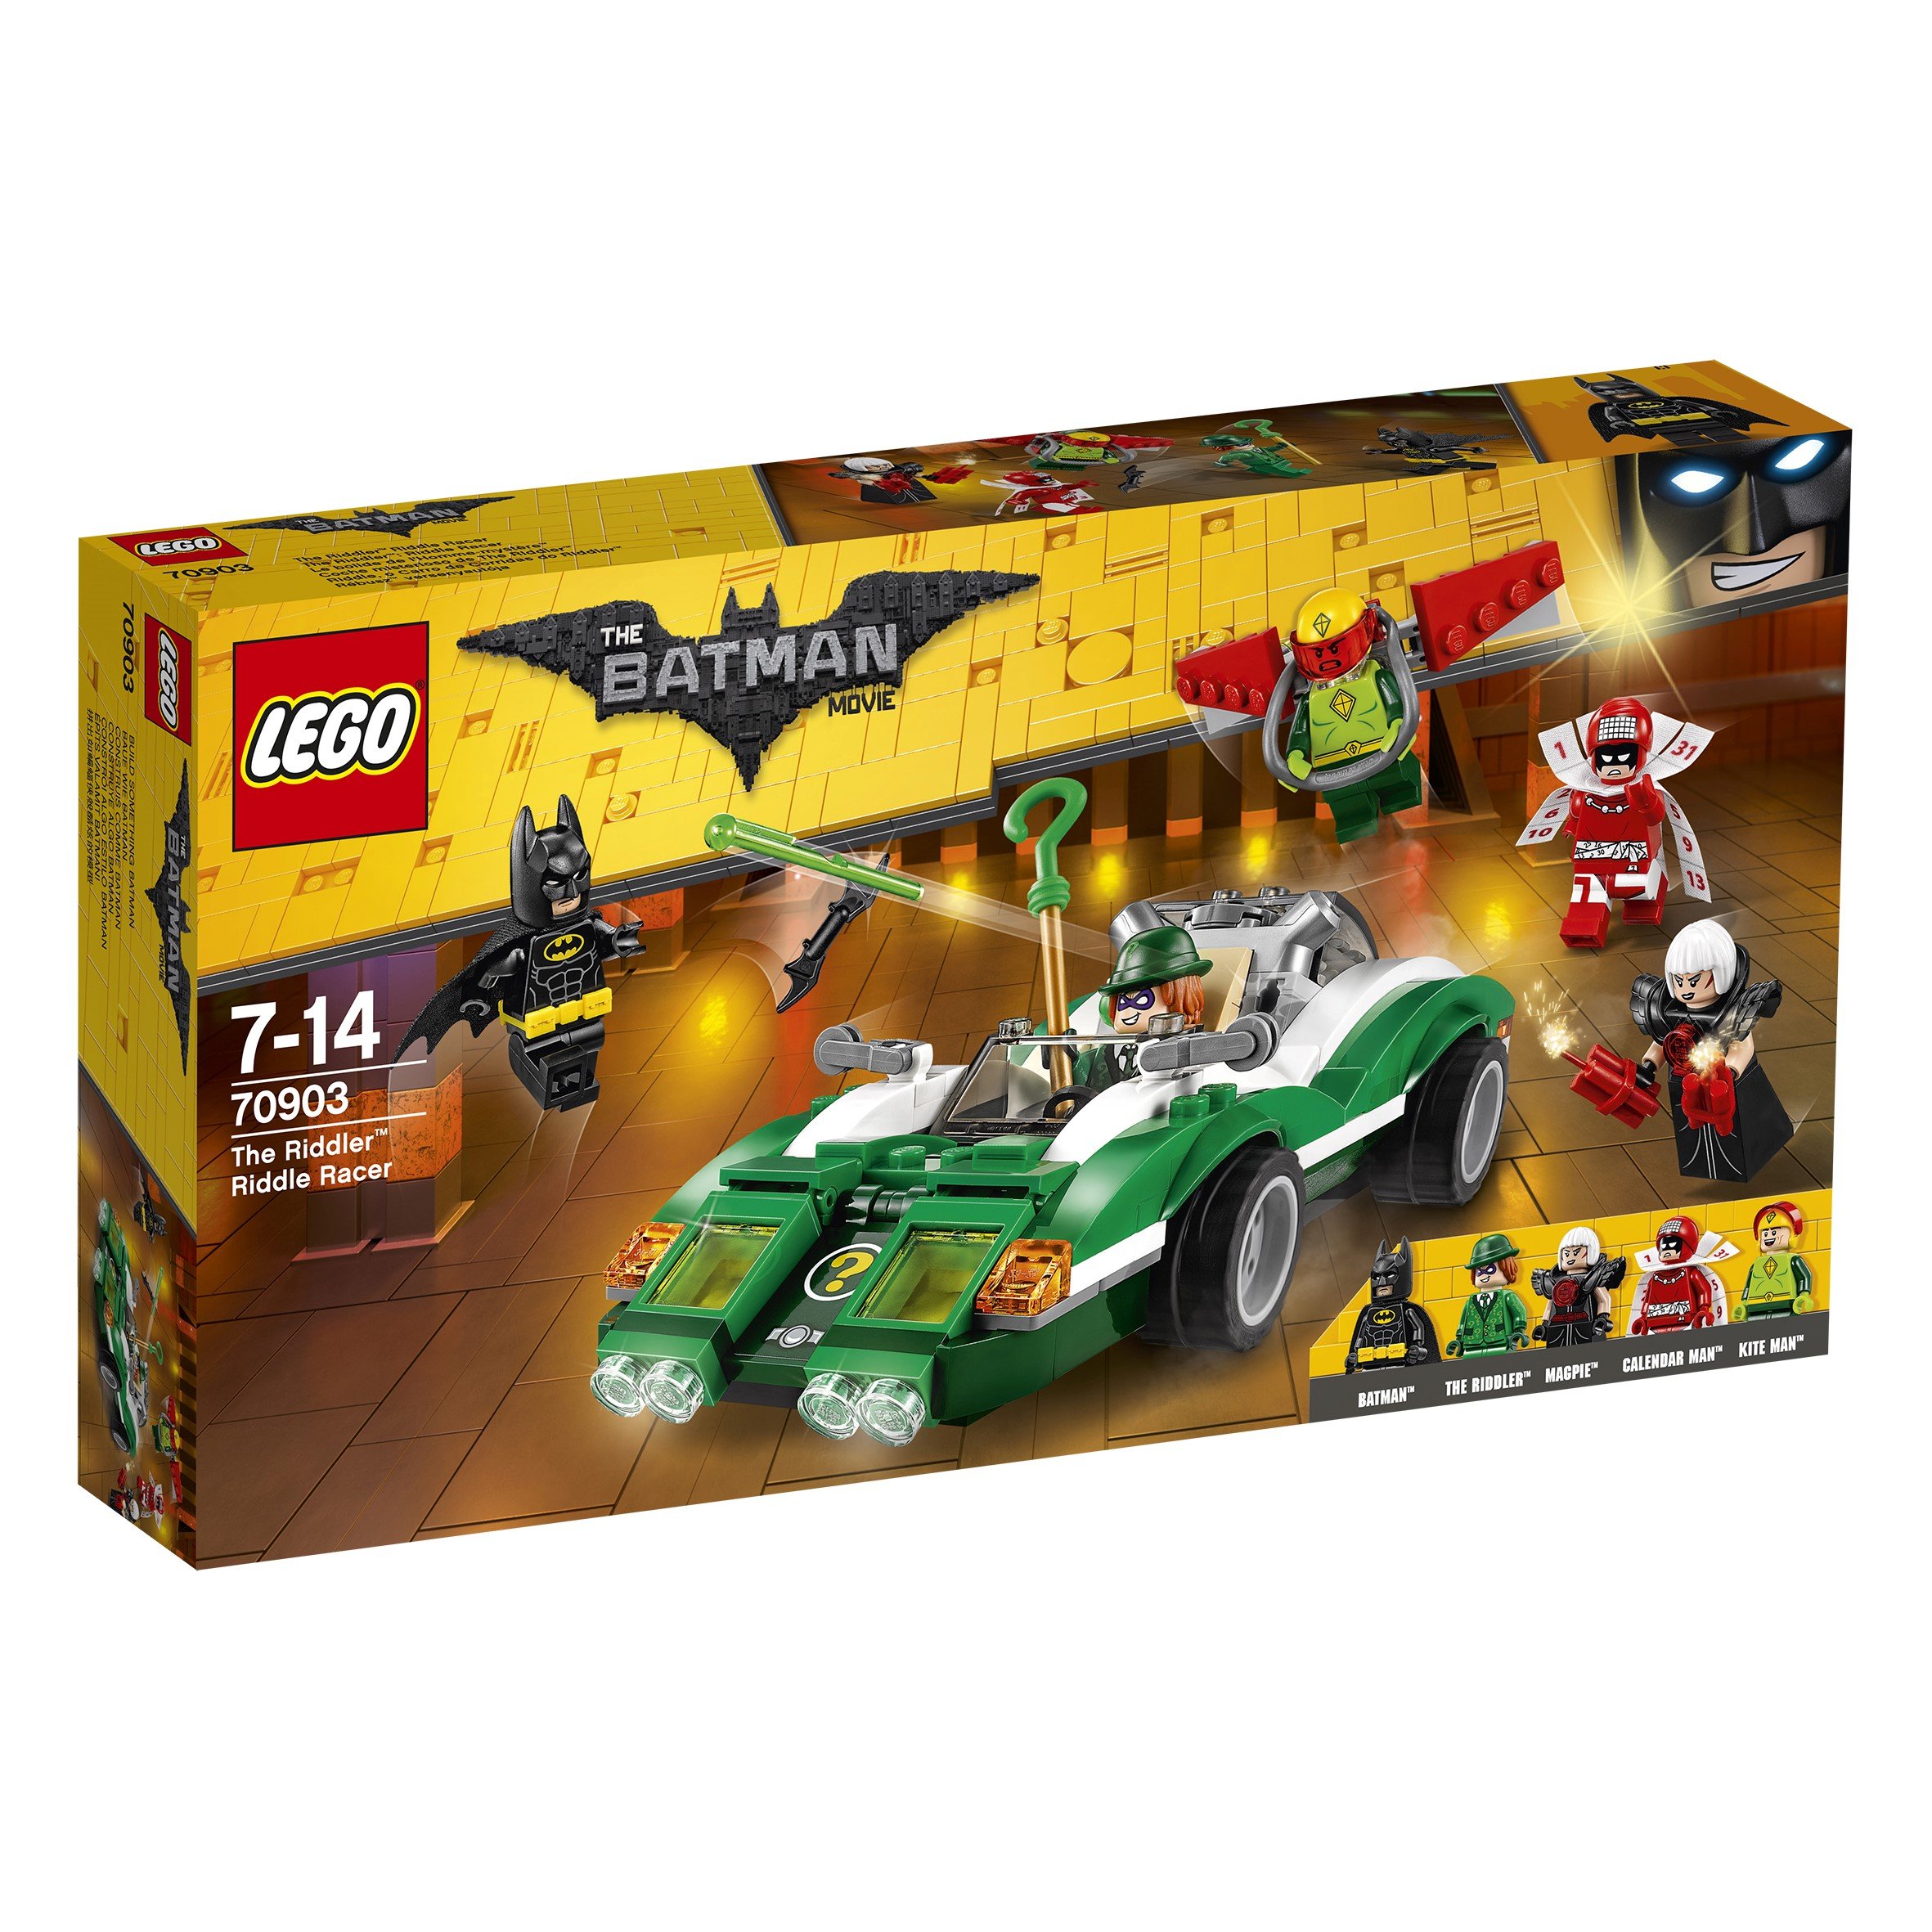 Lego The Batman Movie The Riddler Riddle Racer Batman Toy